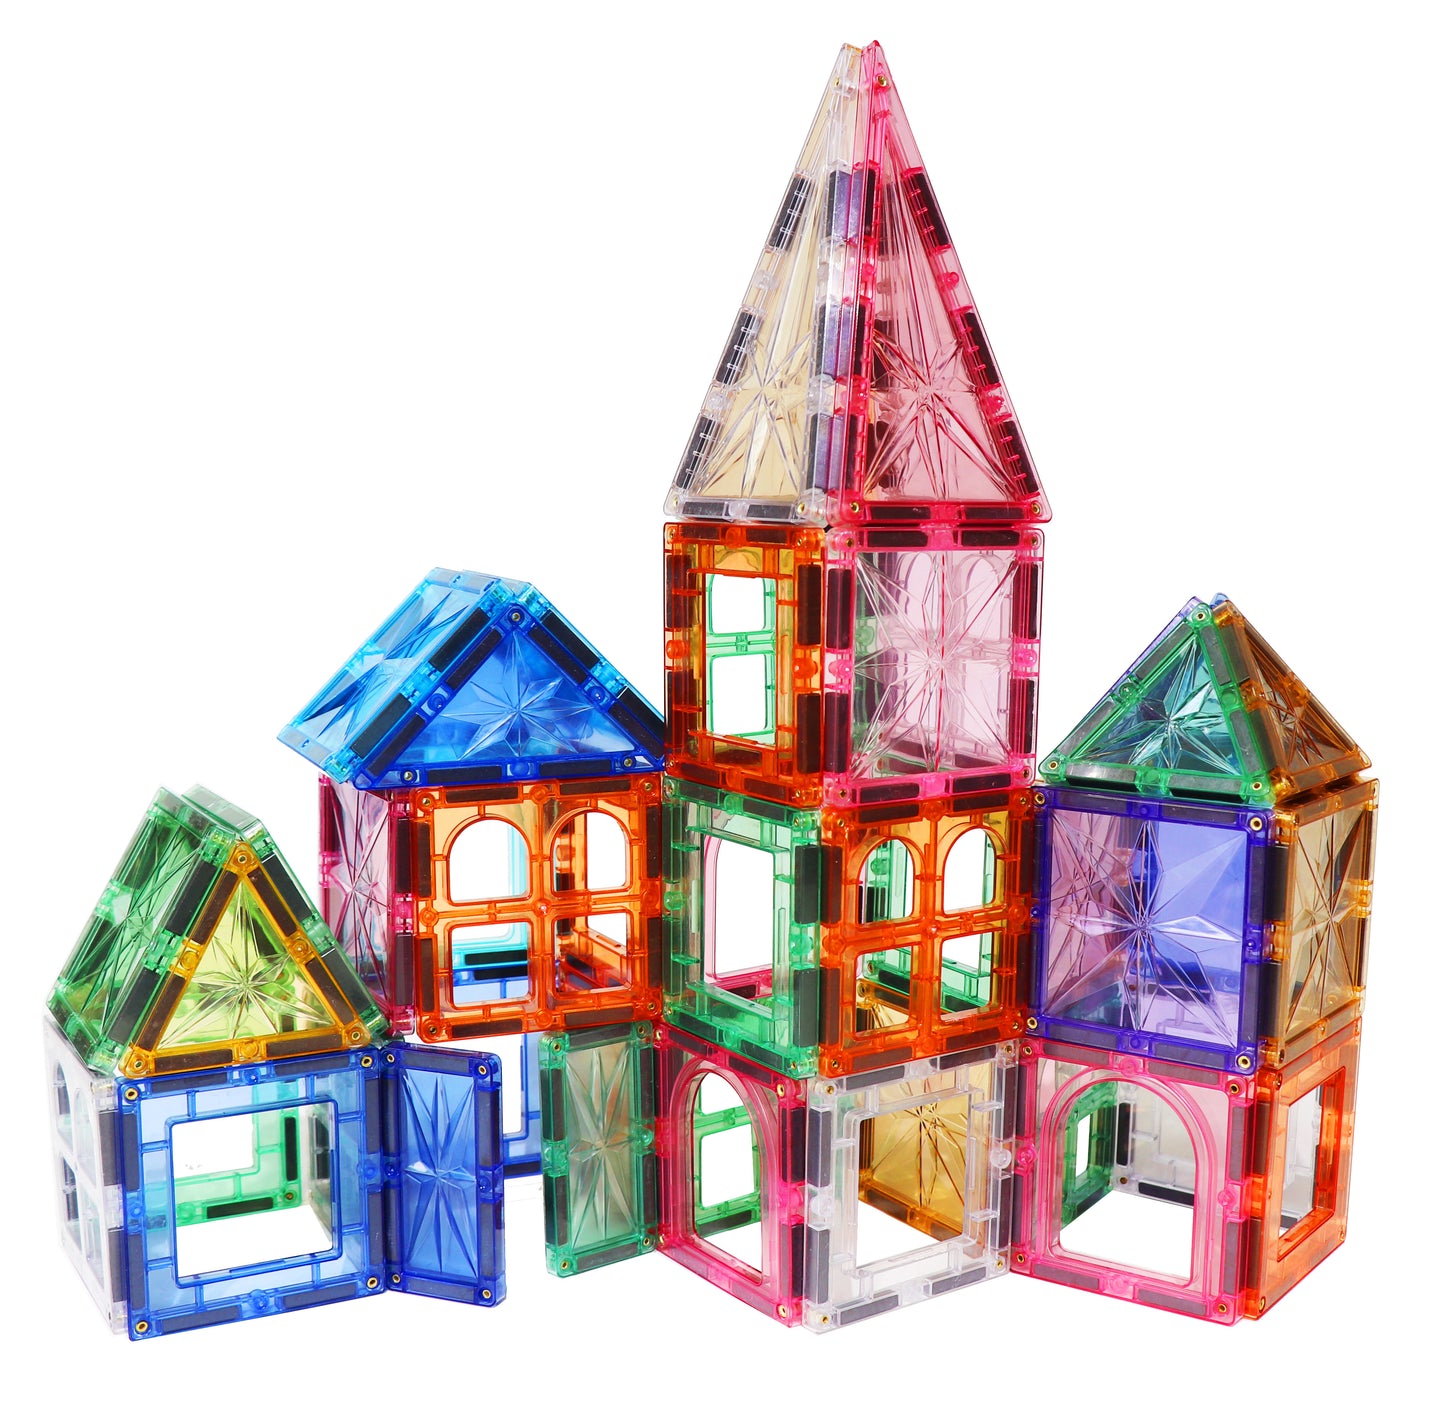 3D Magnetic Building Blocks New Shinny Design 36 Piece Set +Gift!